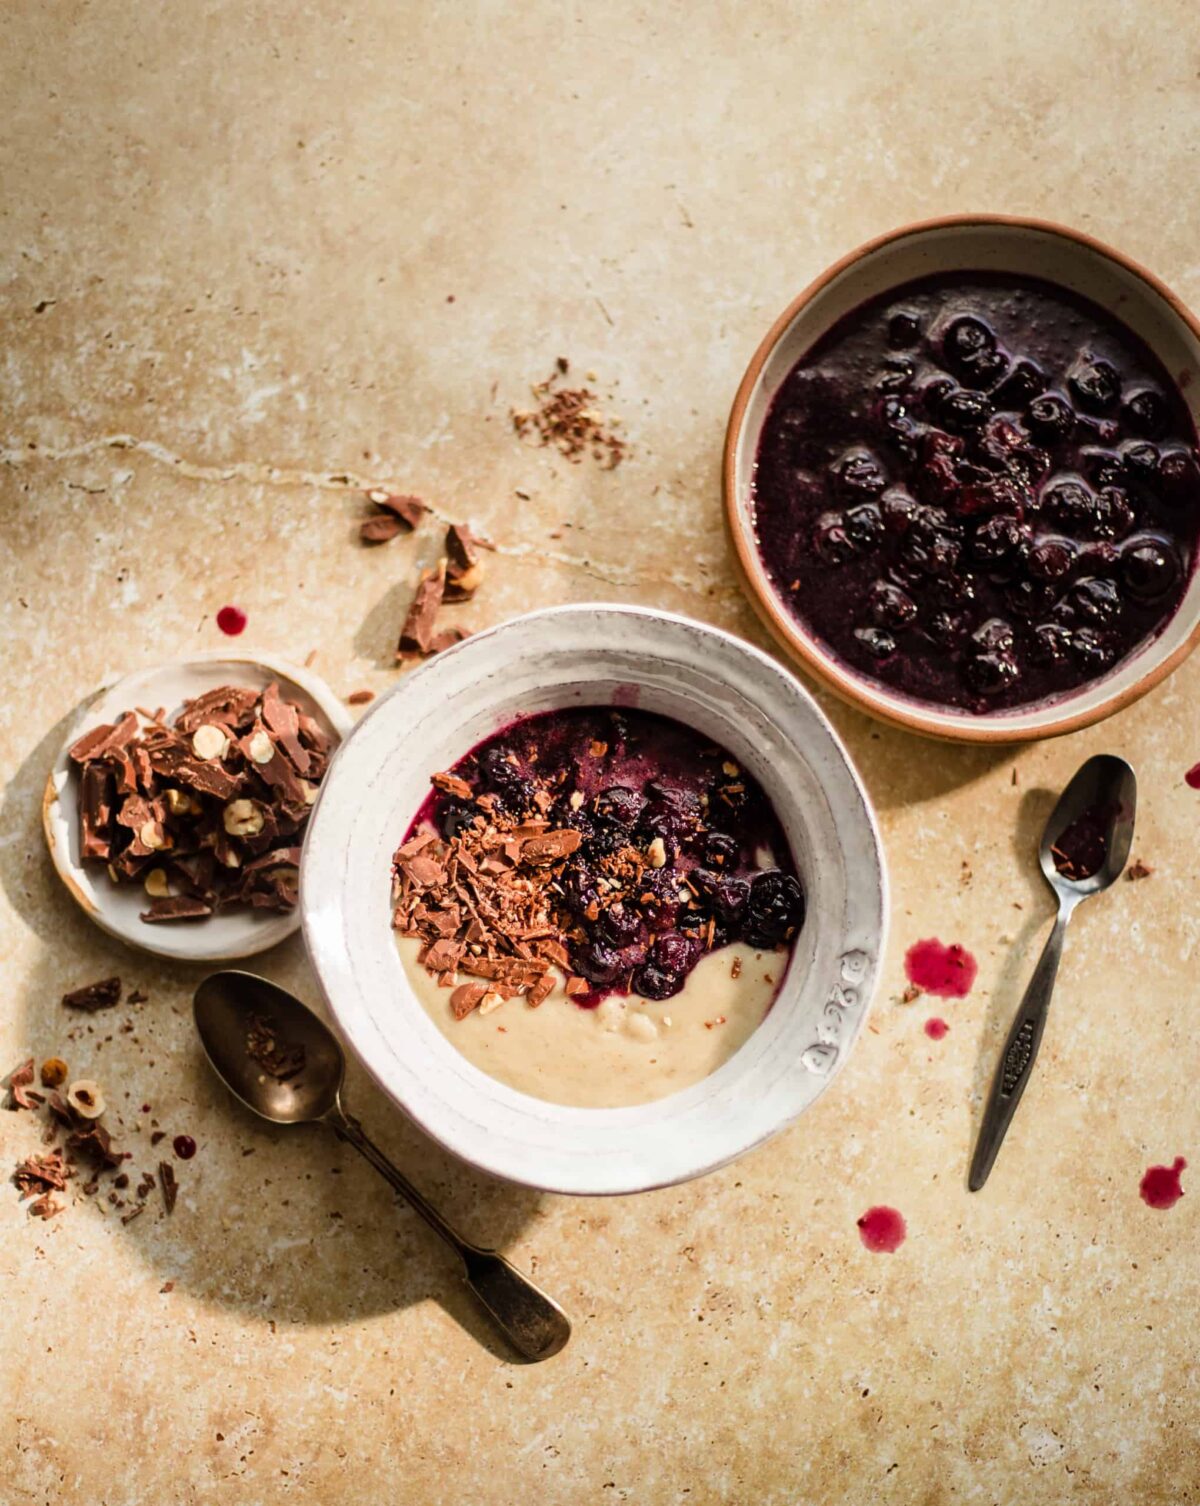 Talbina (barley porridge) in the Instant Pot Mamas Secret Recipes